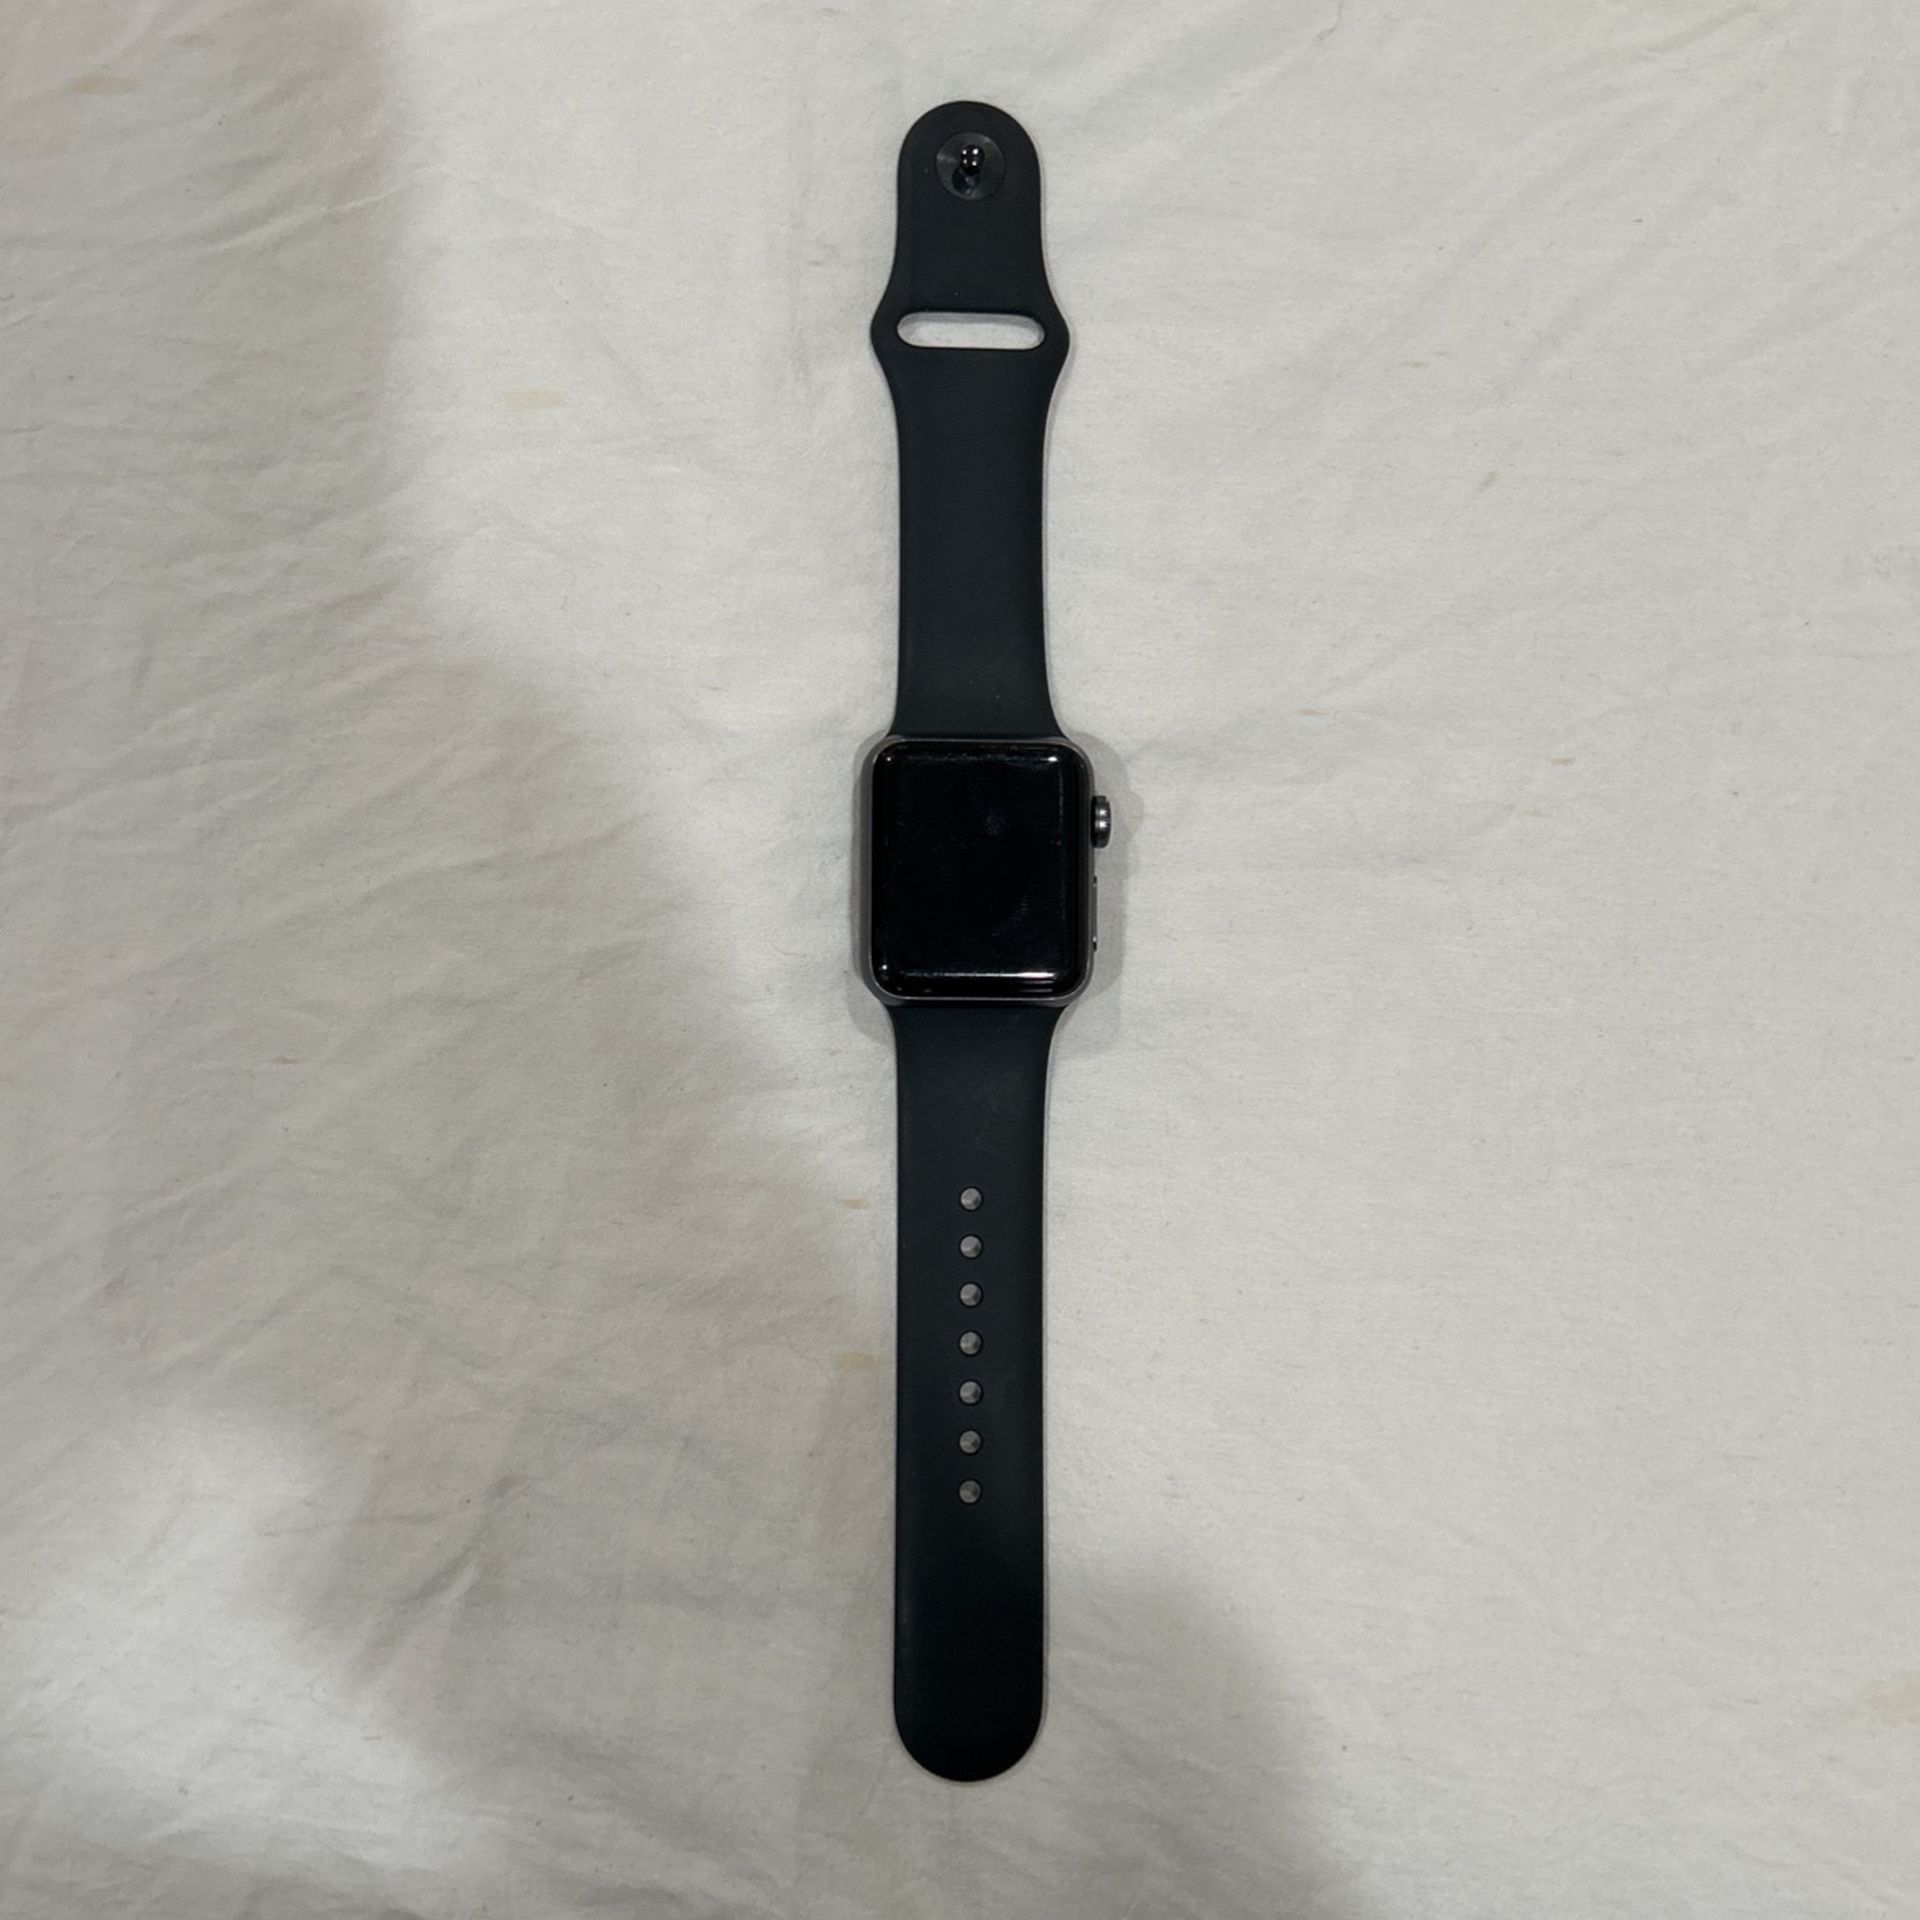 Apple Watch series 3 – 38mm